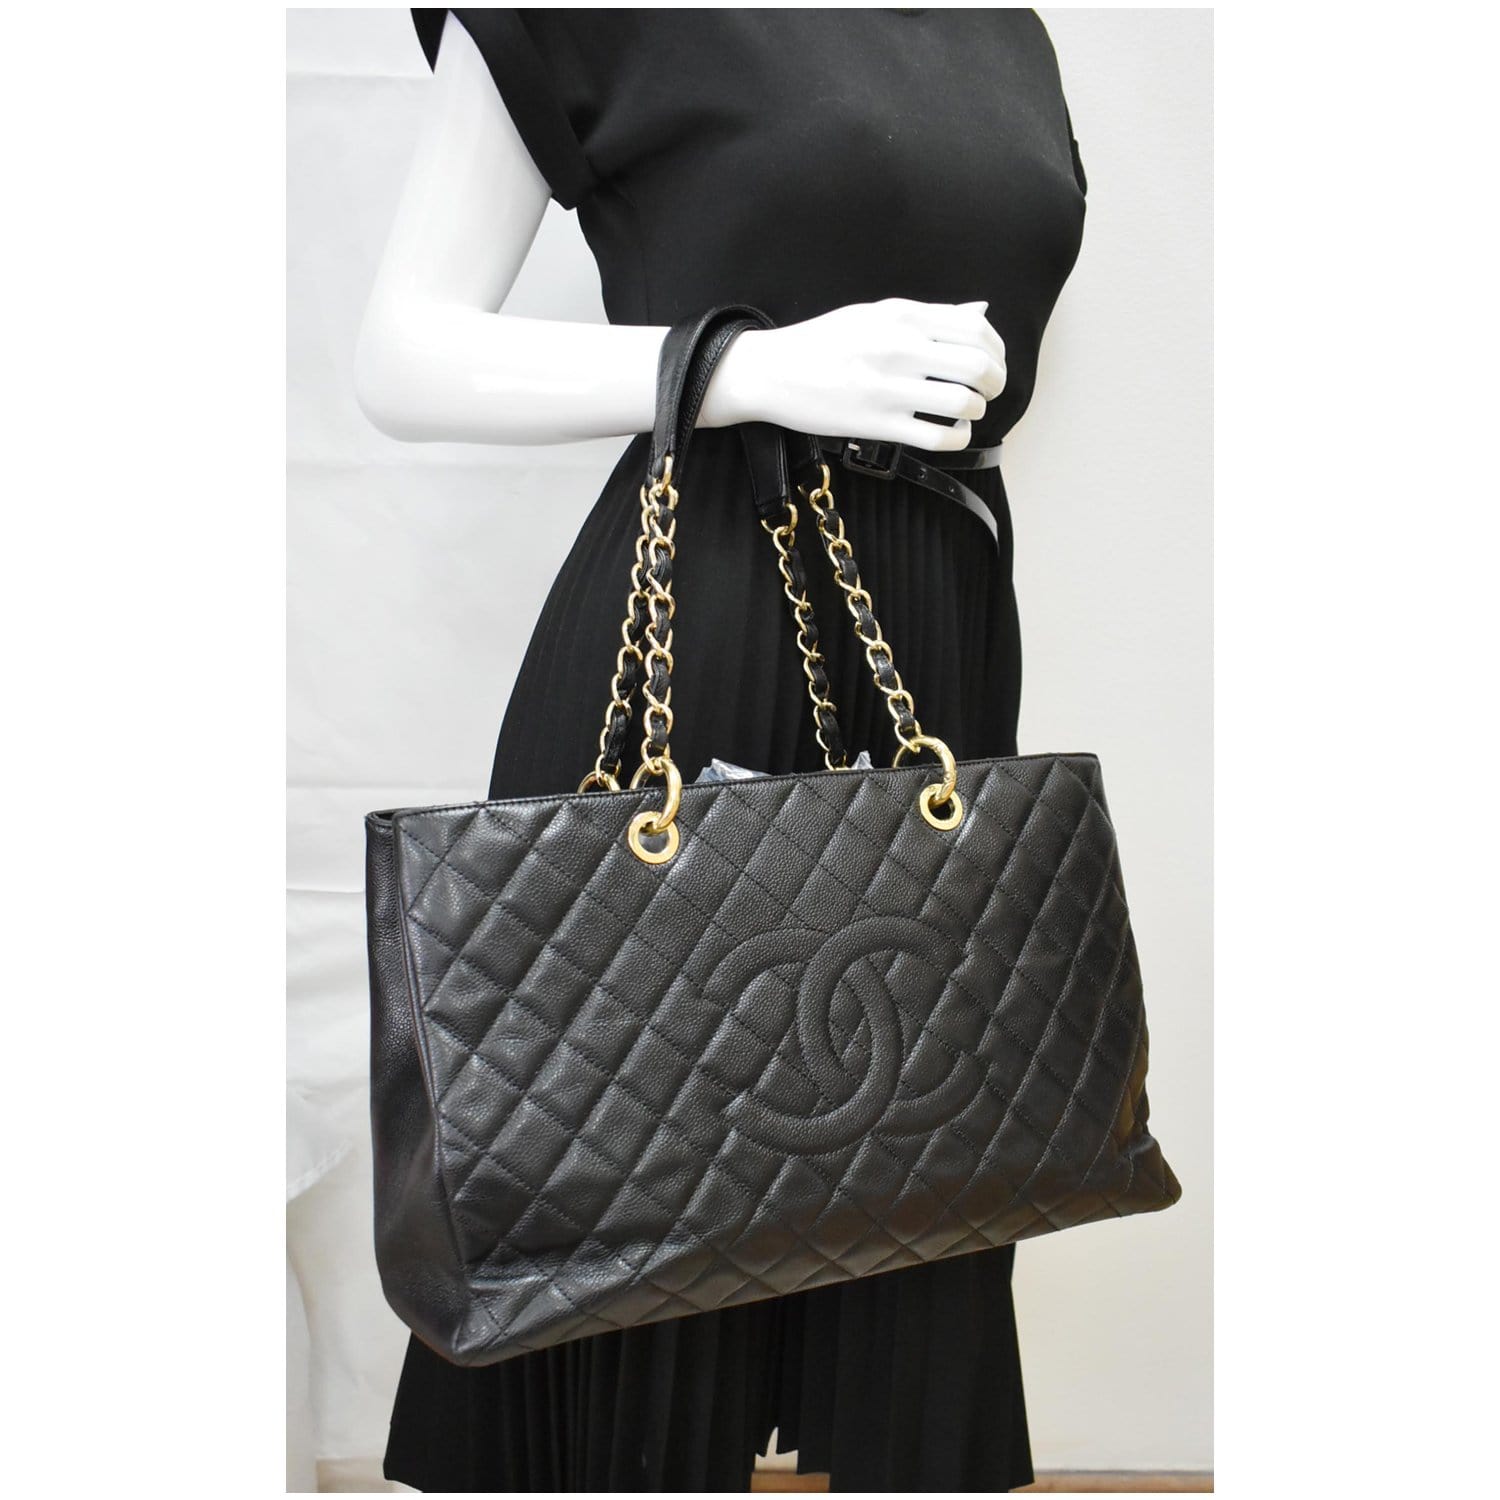 Chanel Black Caviar GST Grand Shopper Tote Bag with Gold Hardware Chanel